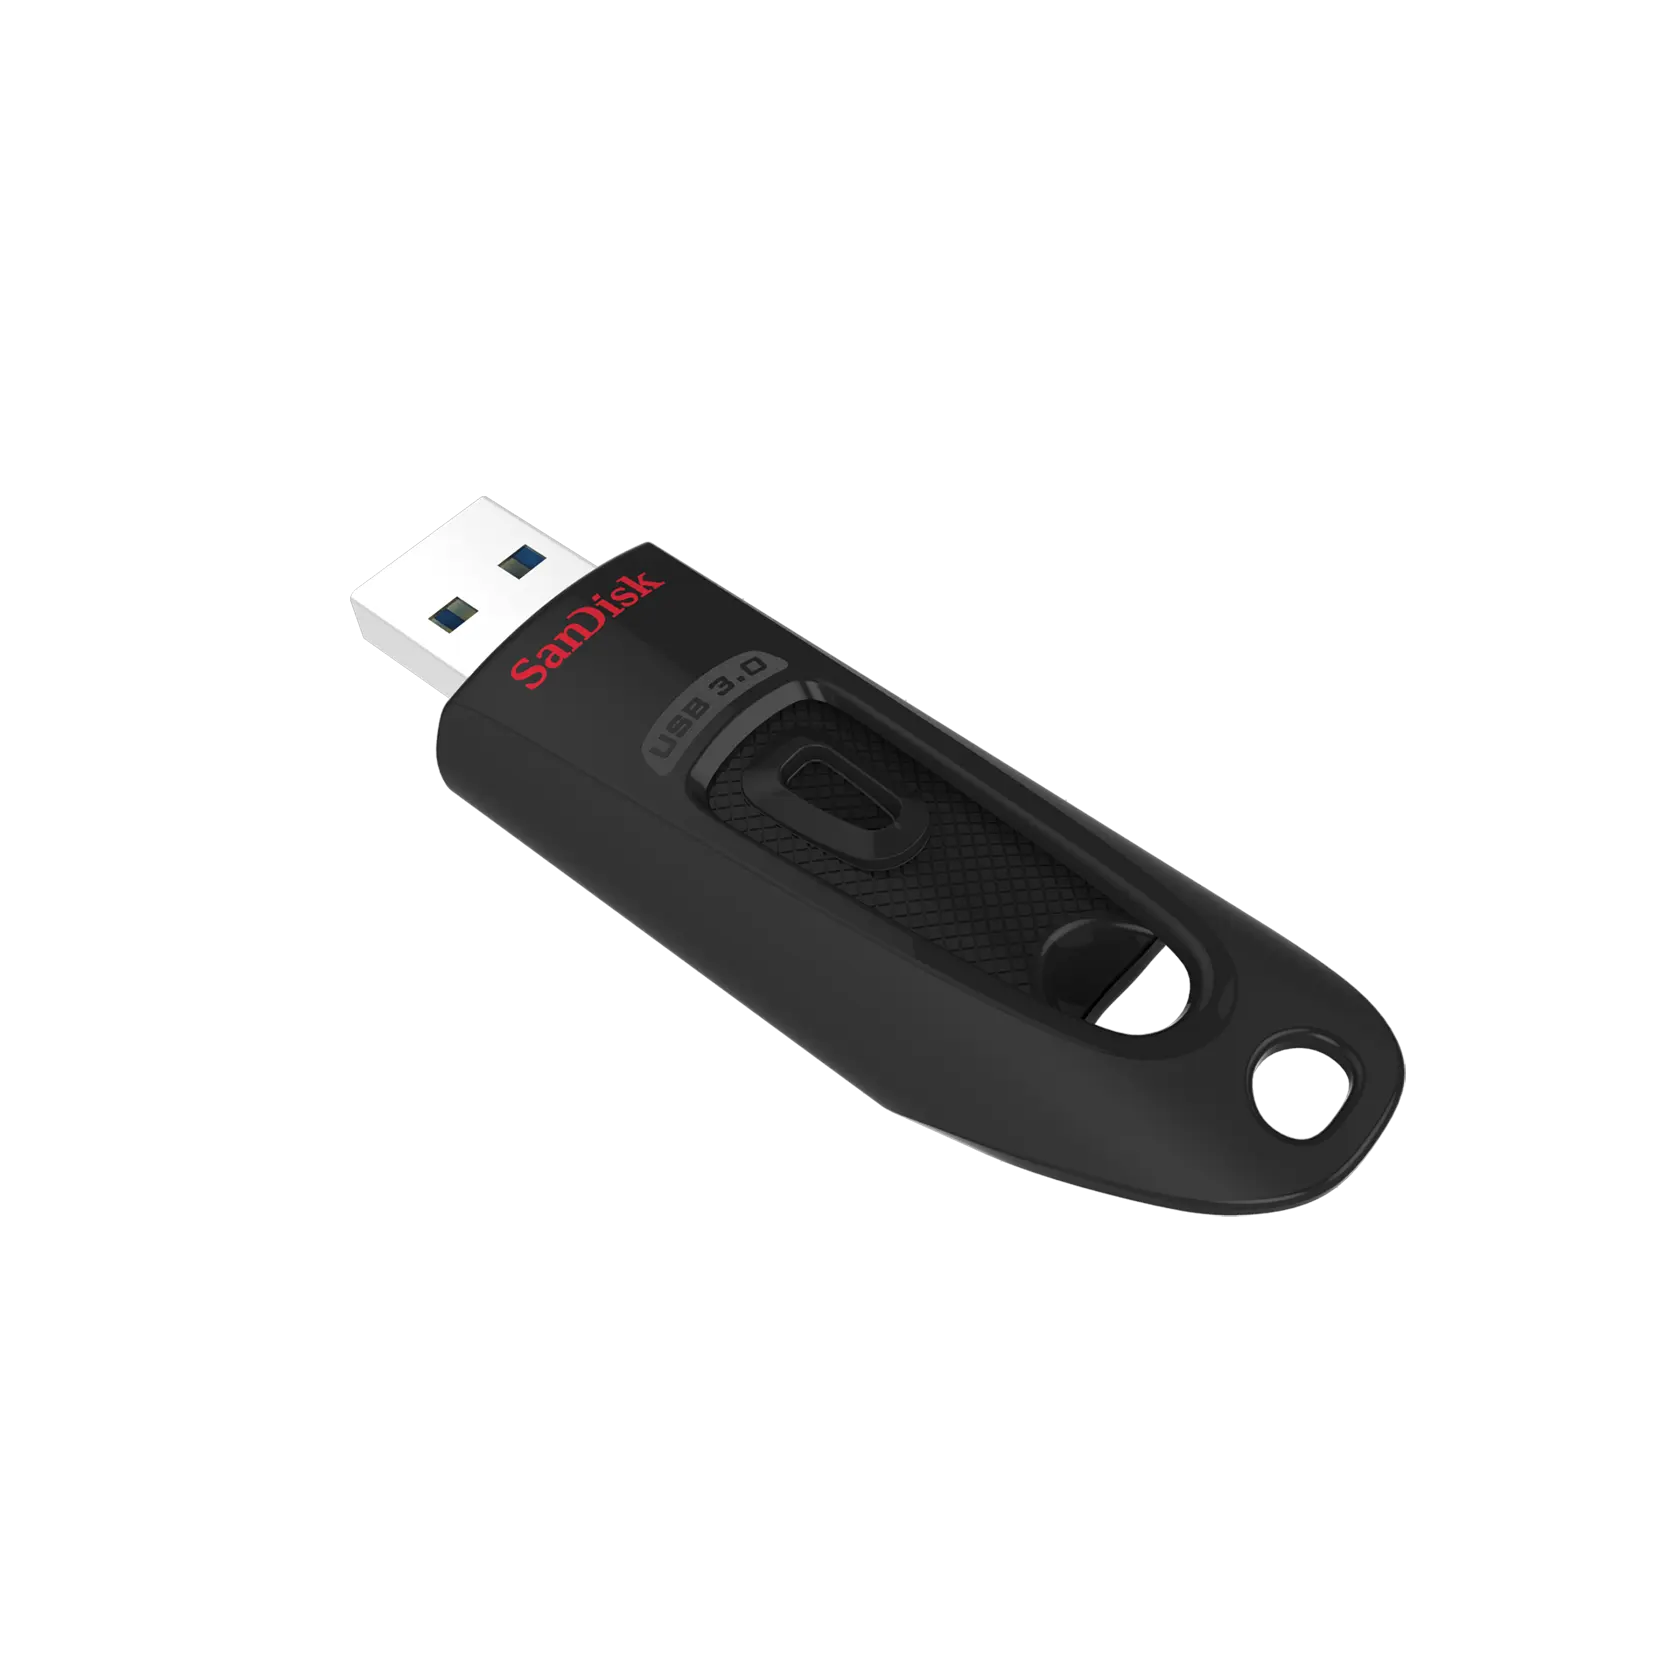 SDCZ48-016G-U46 SanDisk Ultra USB 3.0 Flash Drive